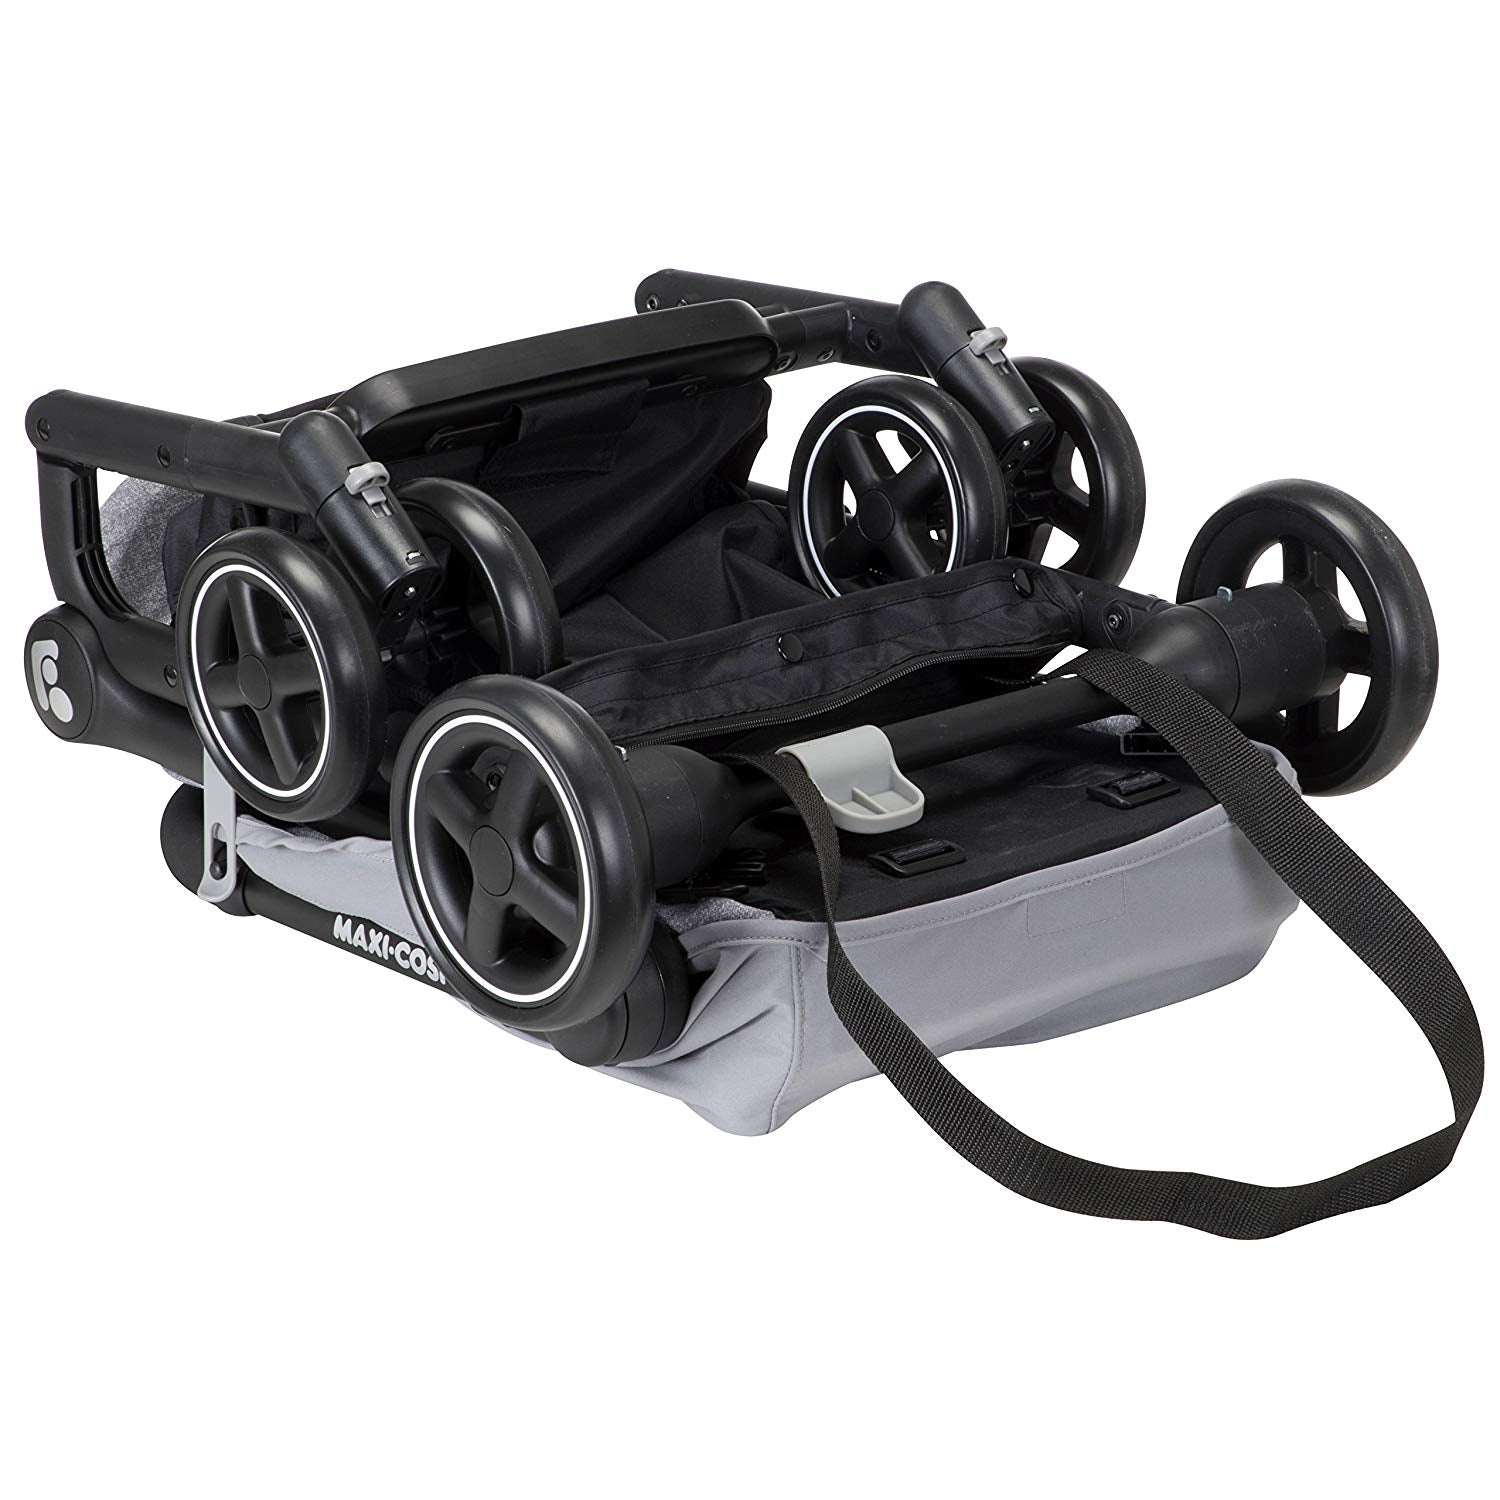 MAXI COSI Lara Lightweight Ultra Compact Stroller - ANB Baby -$100 - $300